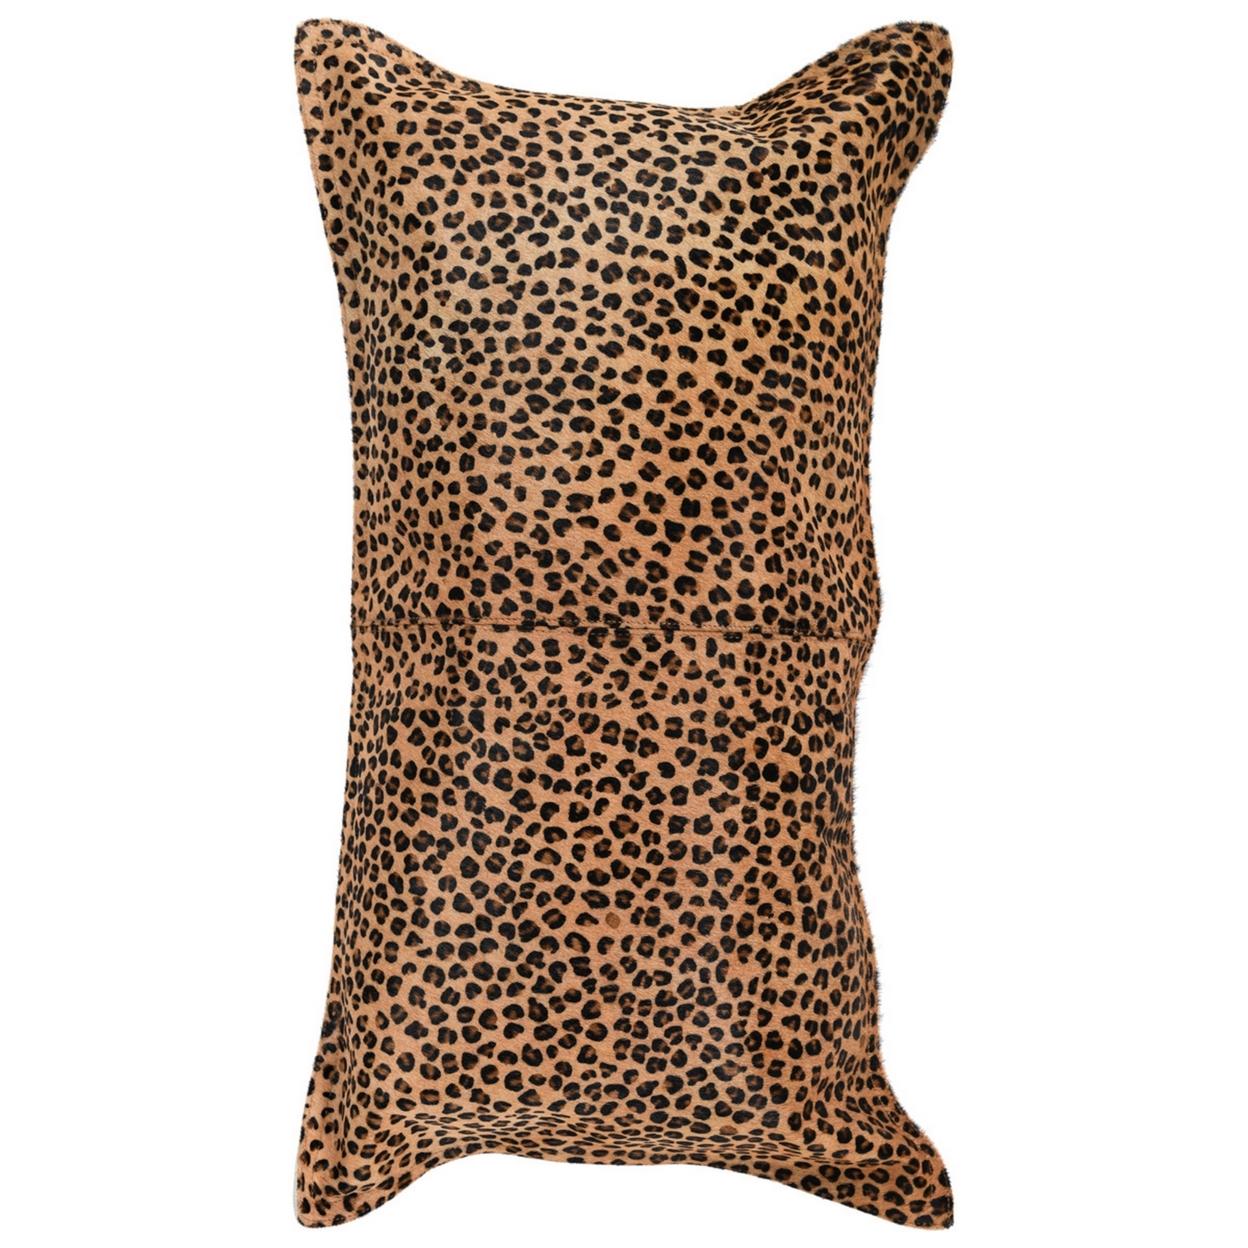 14 X 26 Lumbar Leather Accent Throw Pillow, Leopard Print, Brown And Black- Saltoro Sherpi